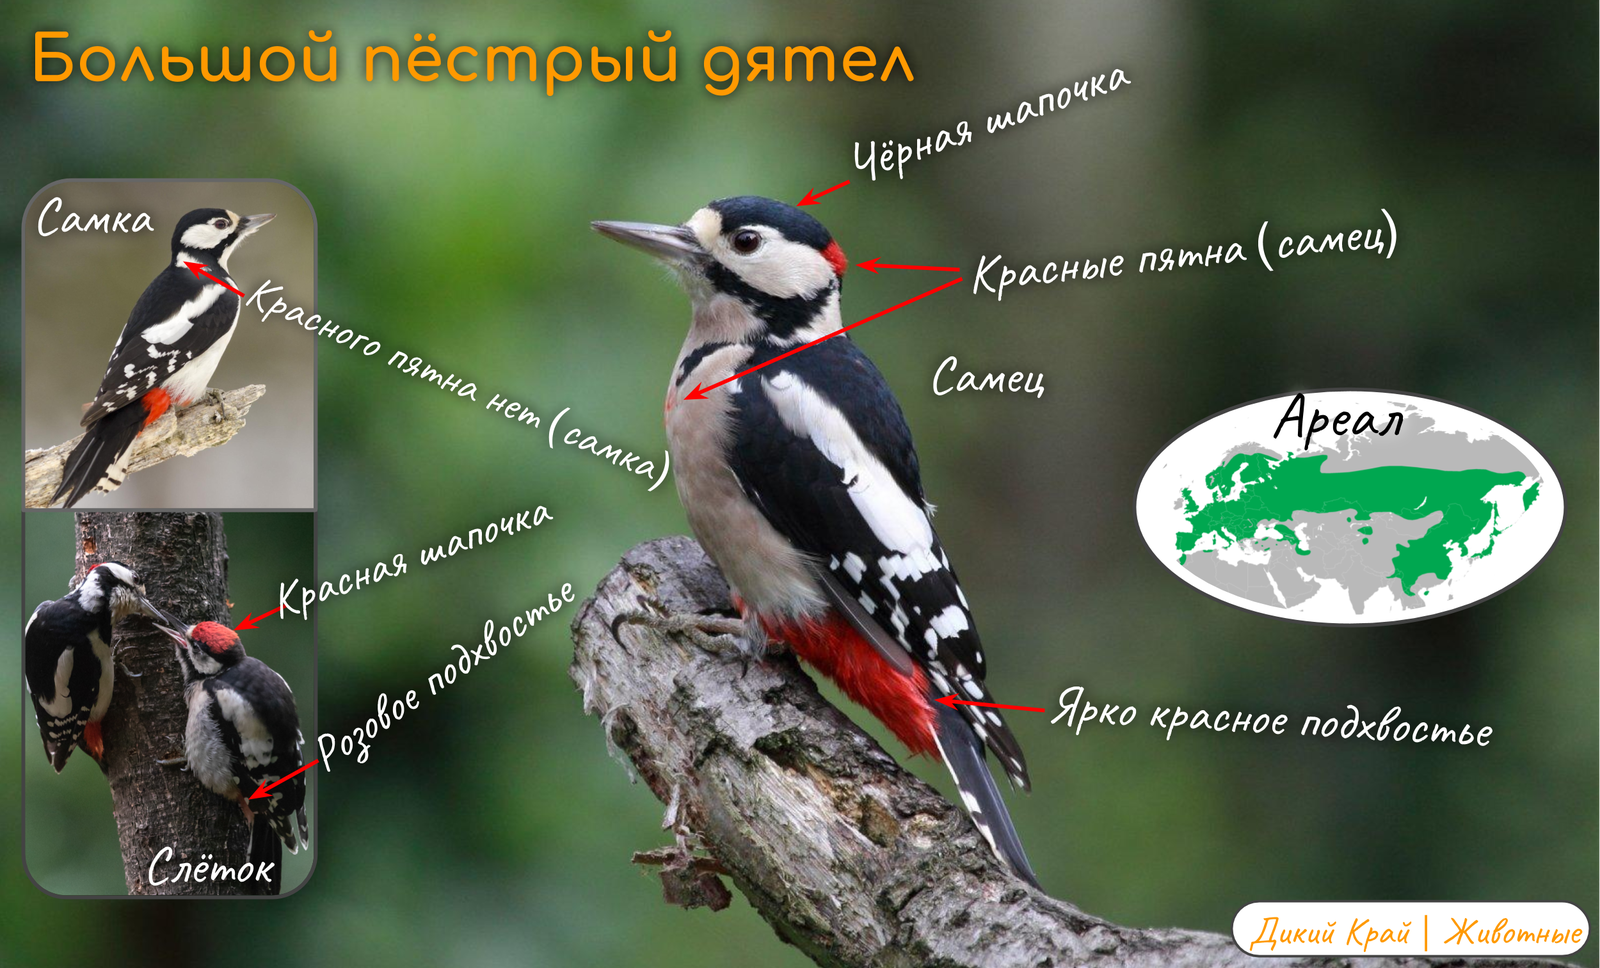 Spotted woodpeckers (lat. Dendrocopos) - My, Birds, Animals, Wild animals, Nature, Interesting, Bird identification, Ornithology, Bird watching, Longpost